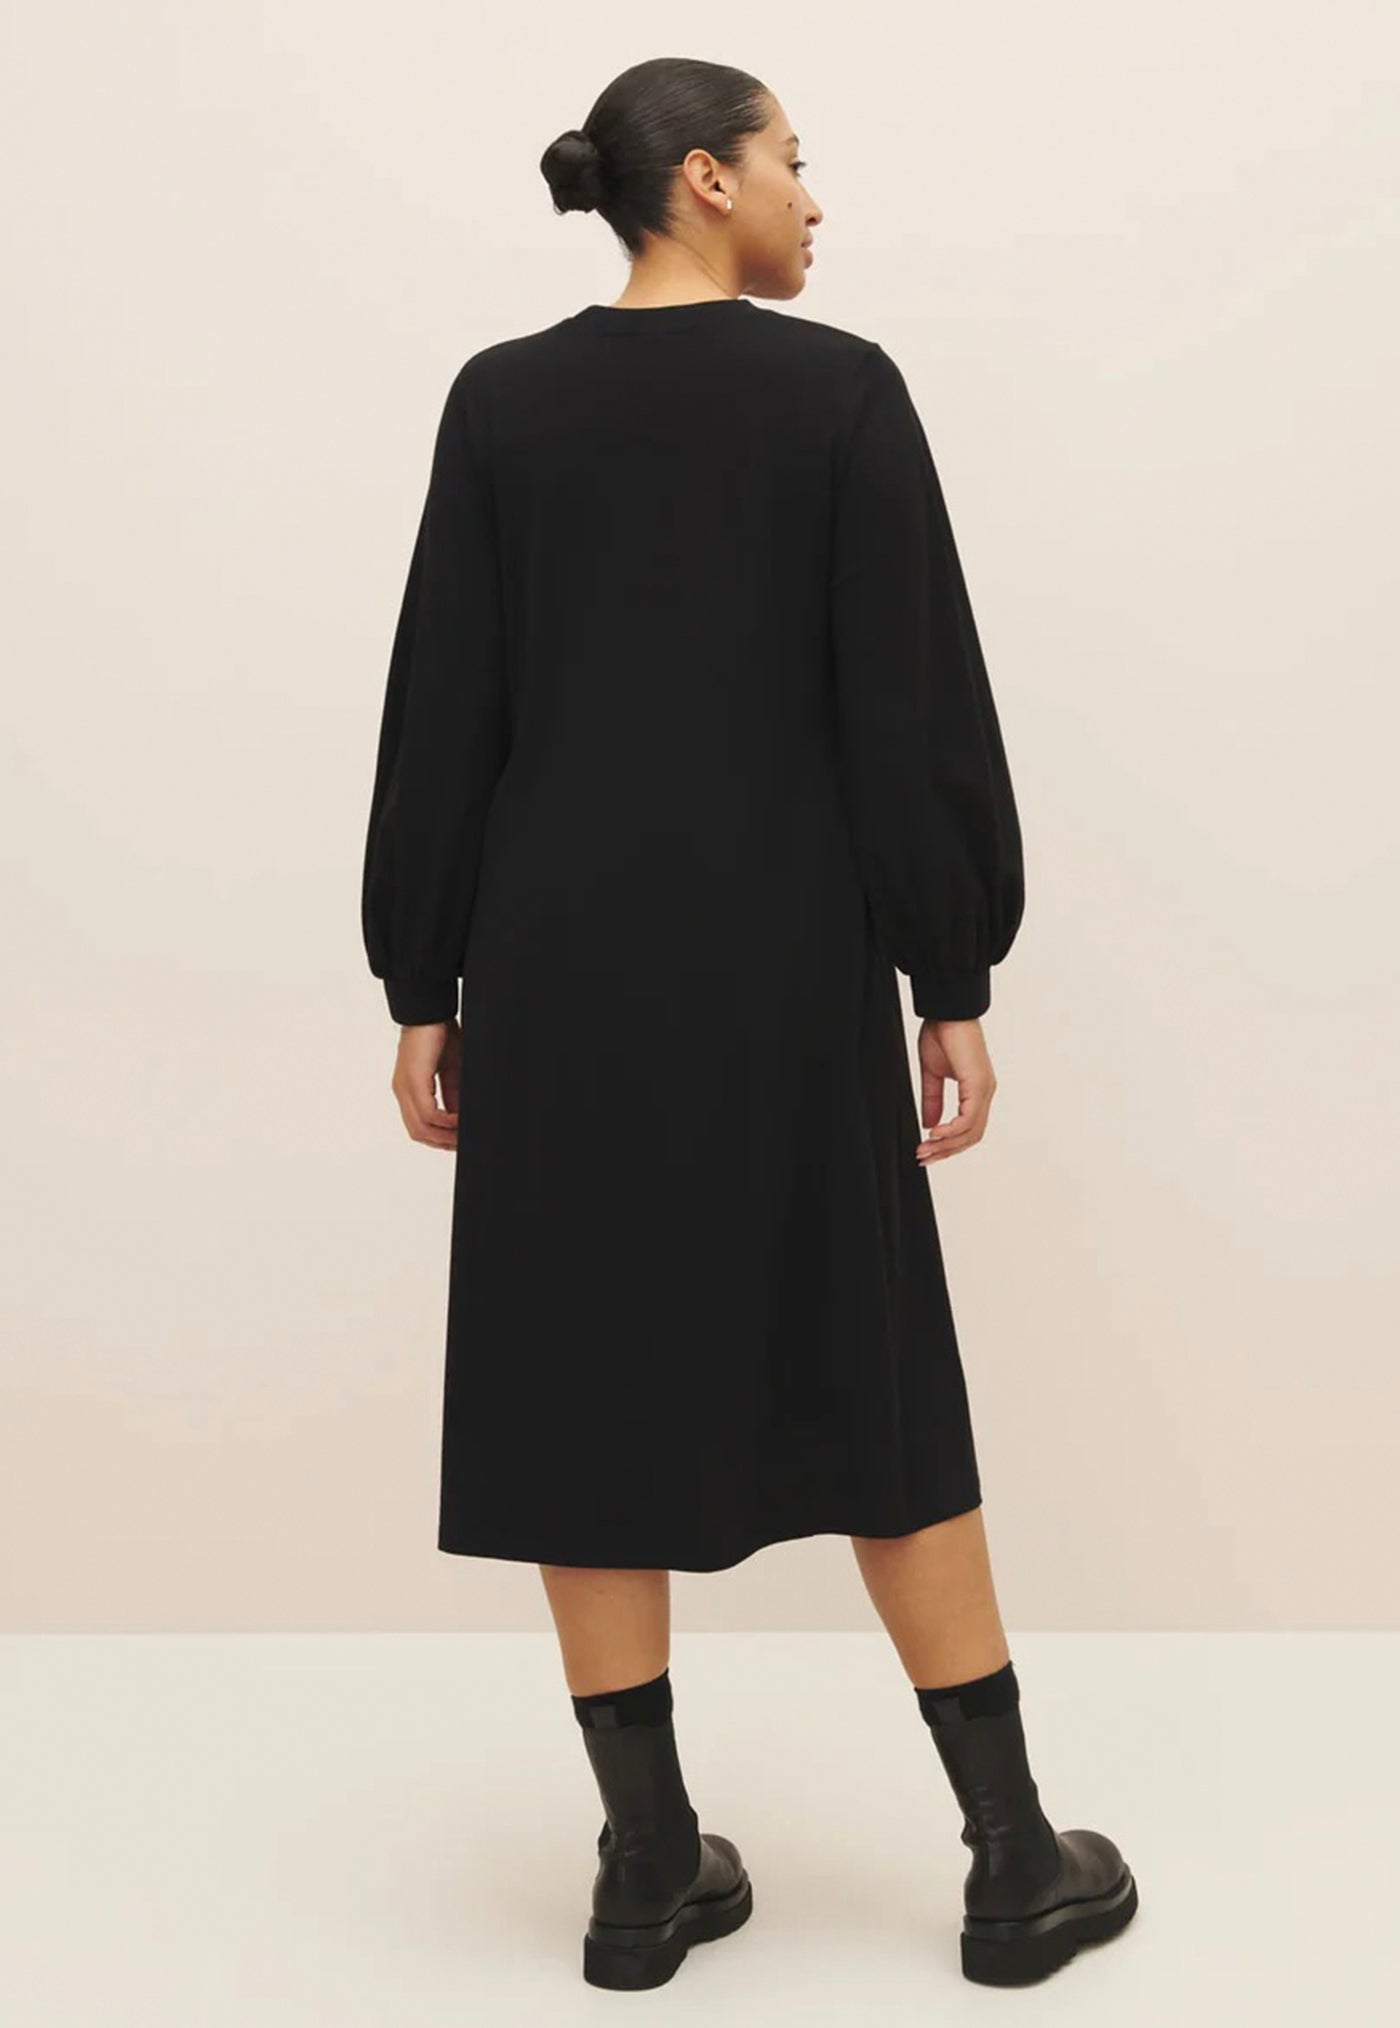 Full Sleeve Dress - Black sold by Angel Divine